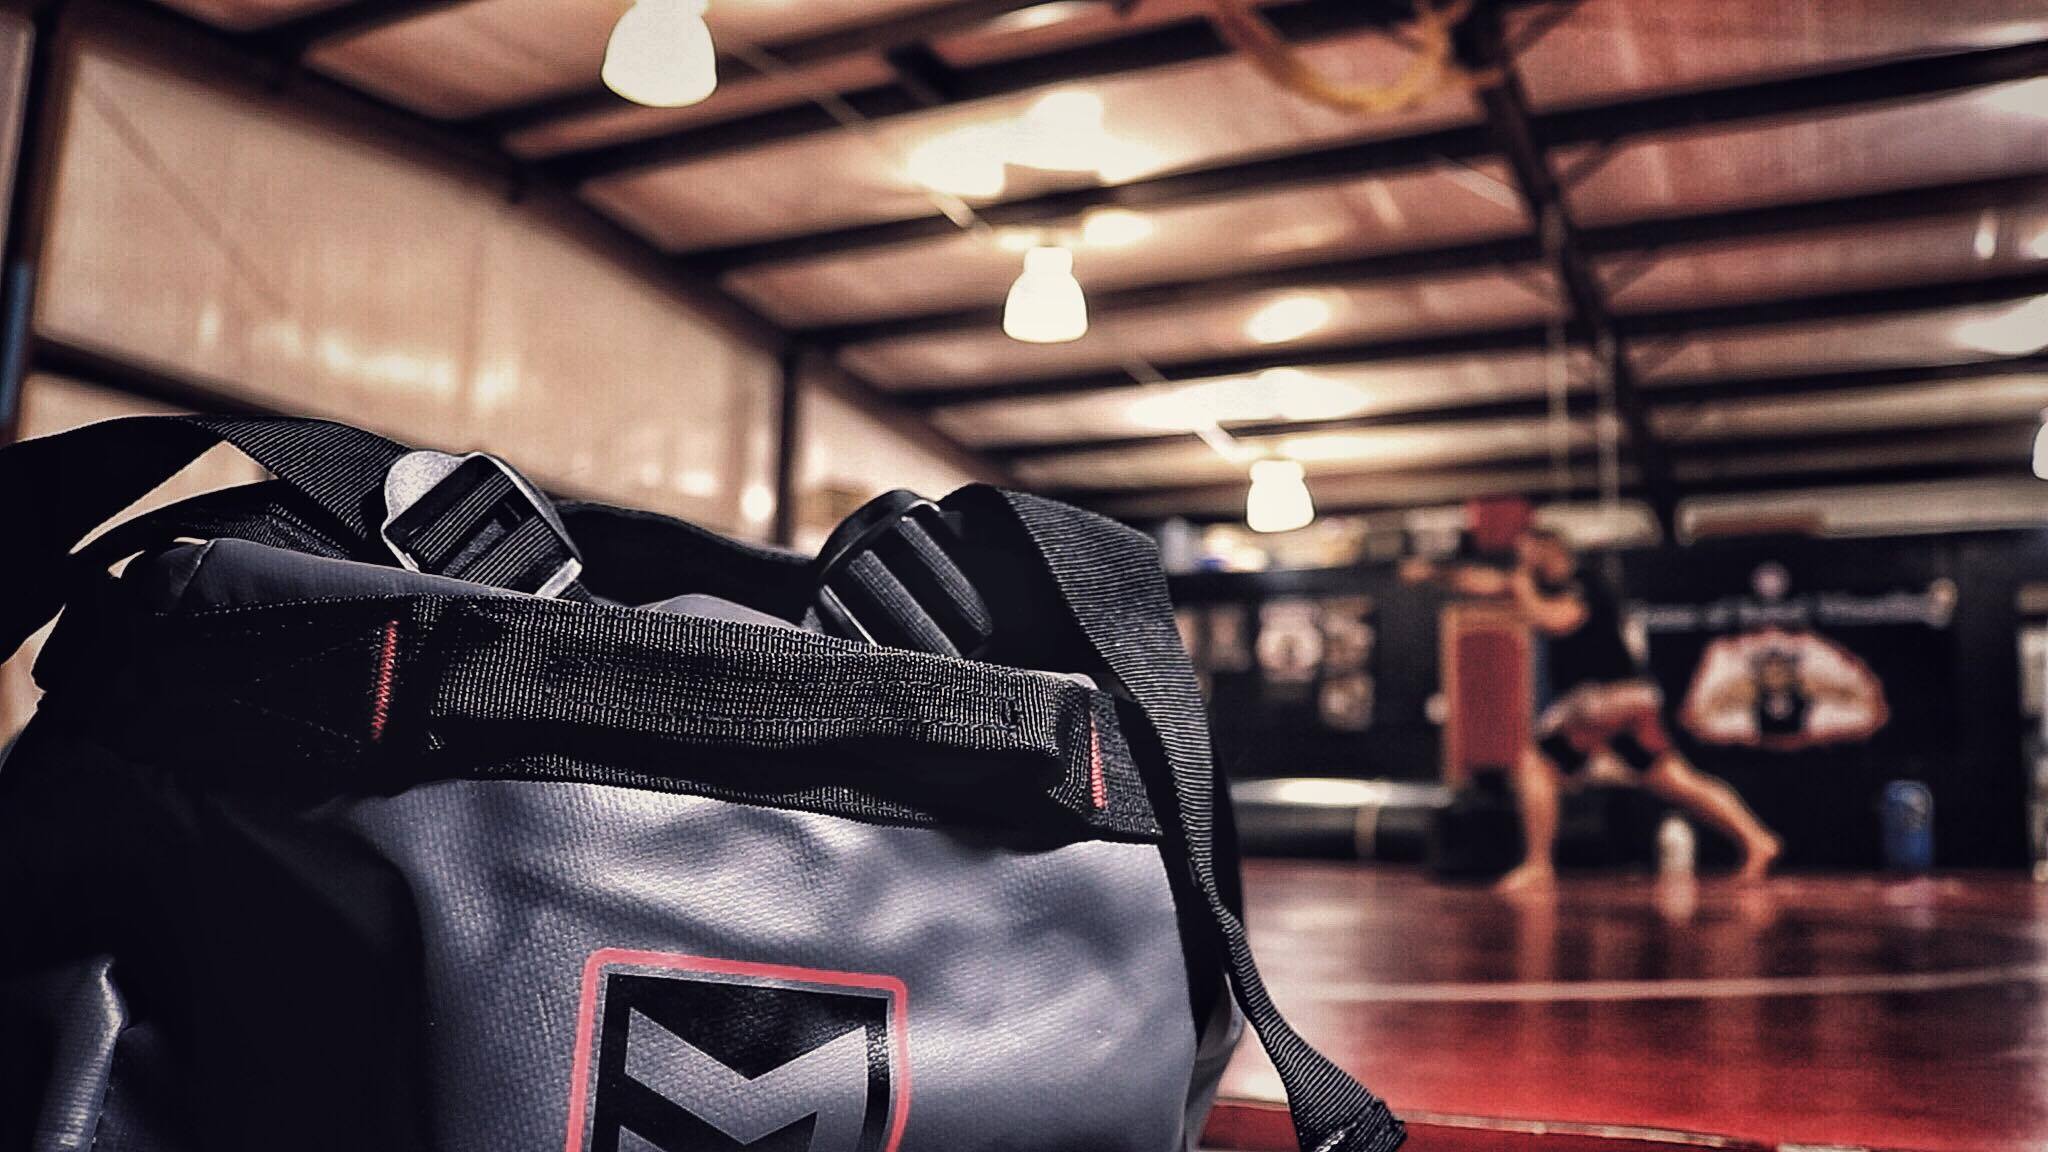 MMA & Fitness Gear Breakdown – What’s In Primal’s Gym Bag?